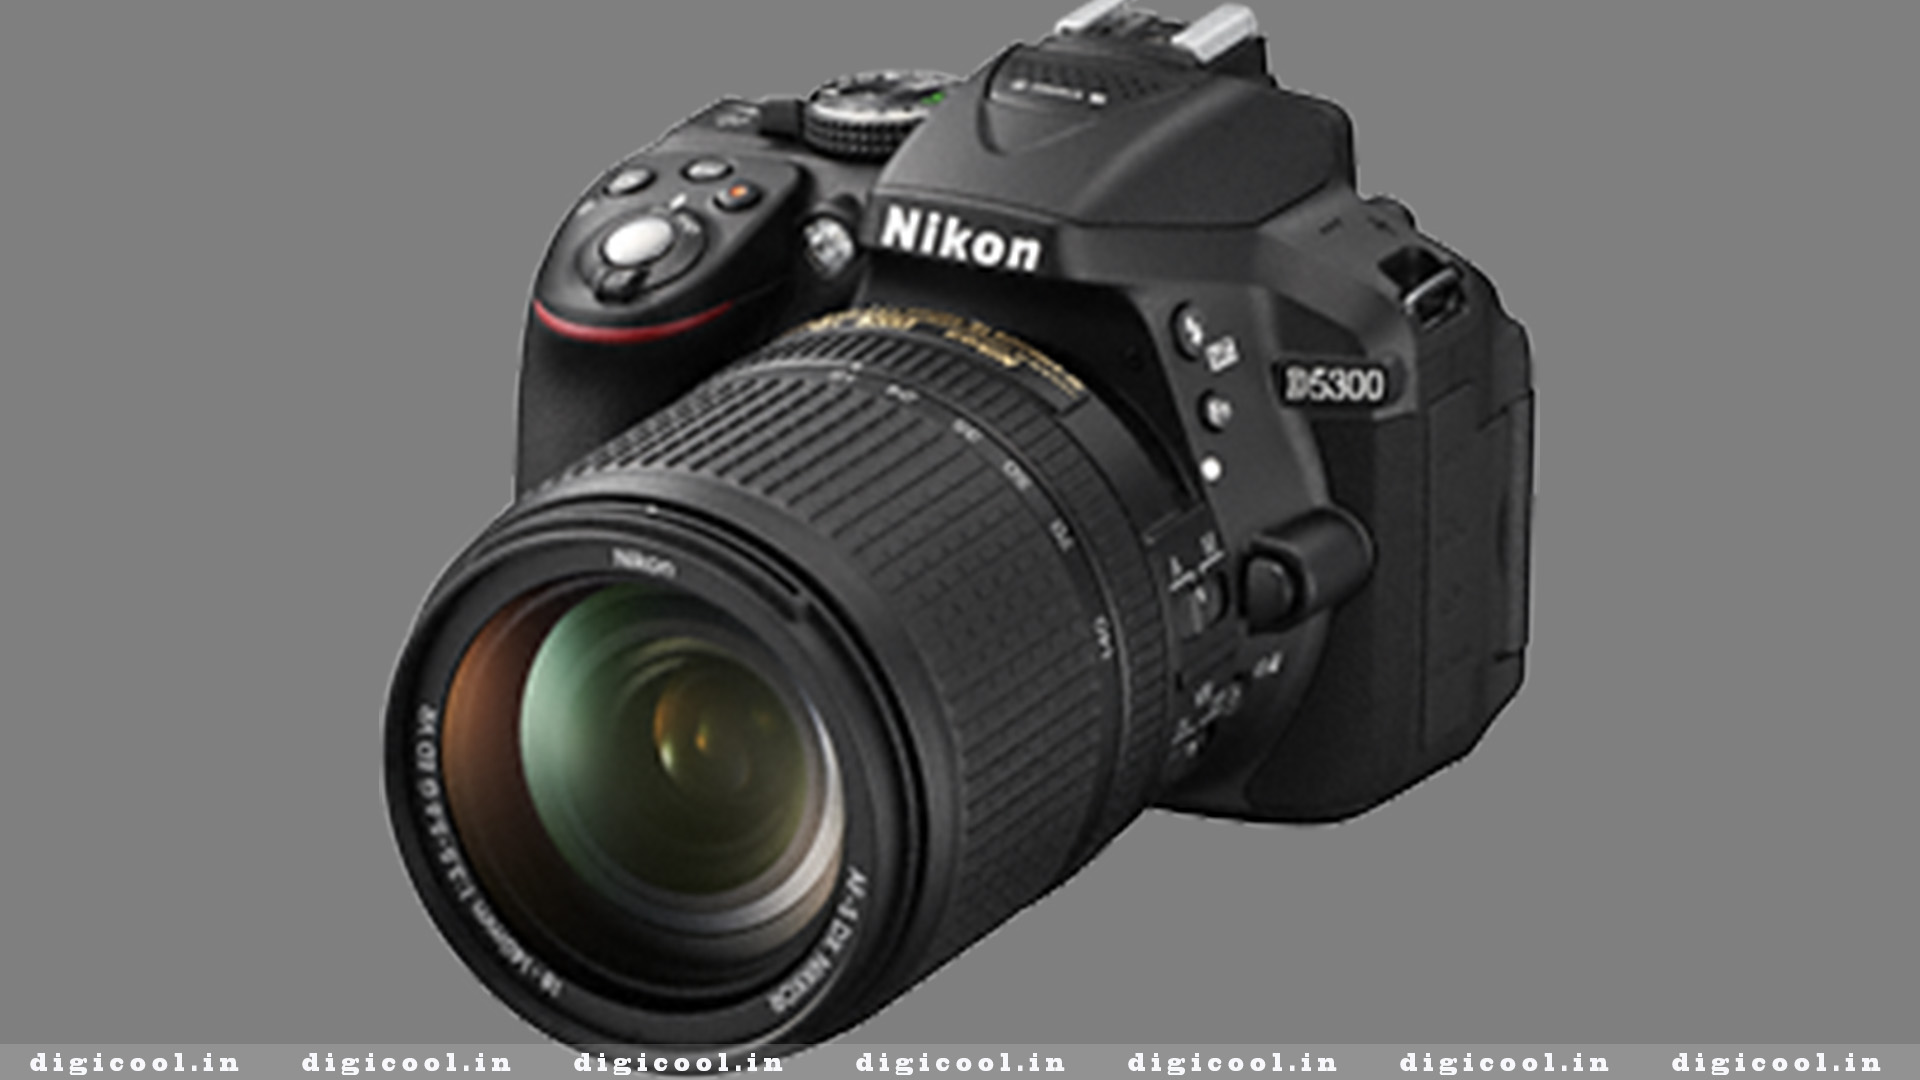 Nikon D5300 24.2MP DSLR Camera in India Review 2020